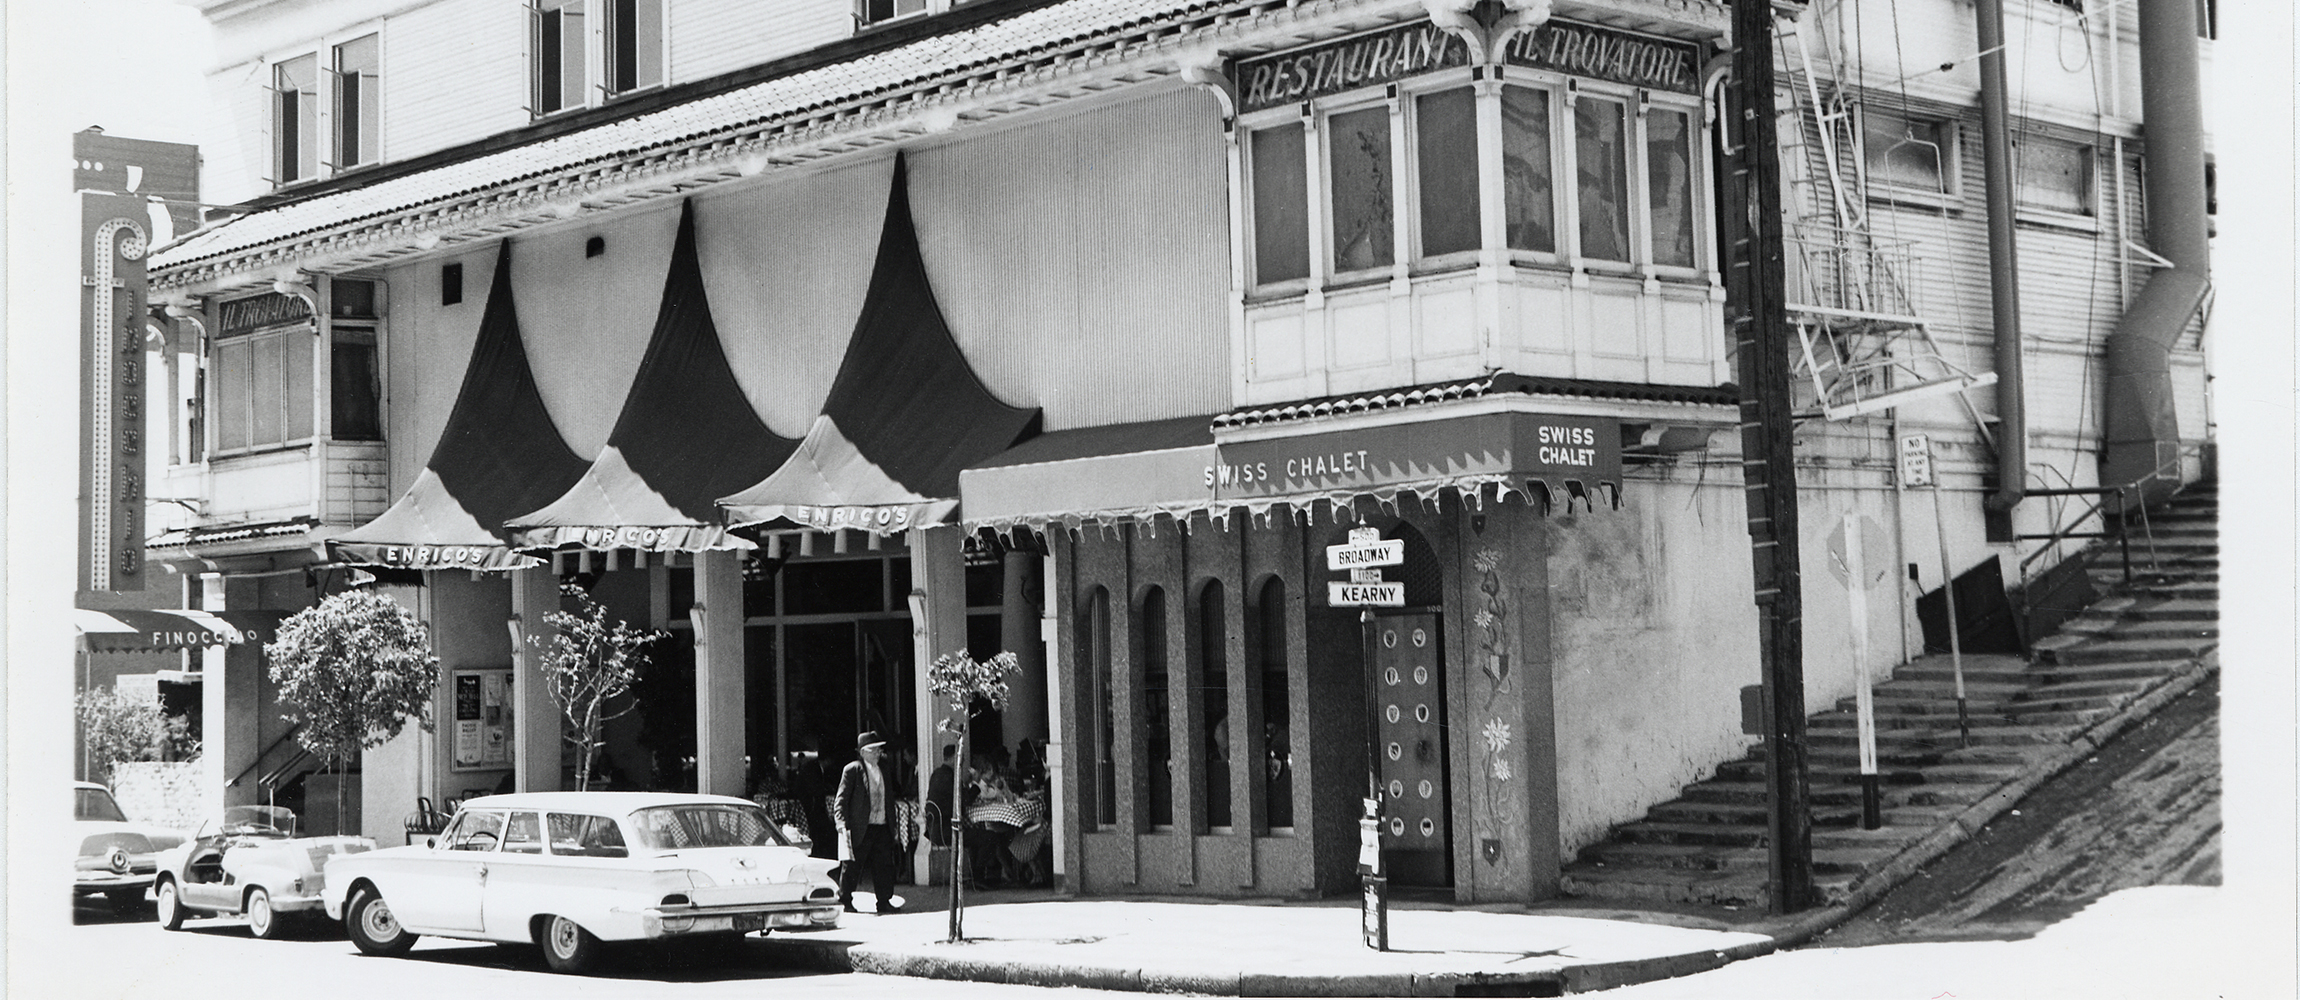 Finocchio's nightclub, 506 Broadway, 1964